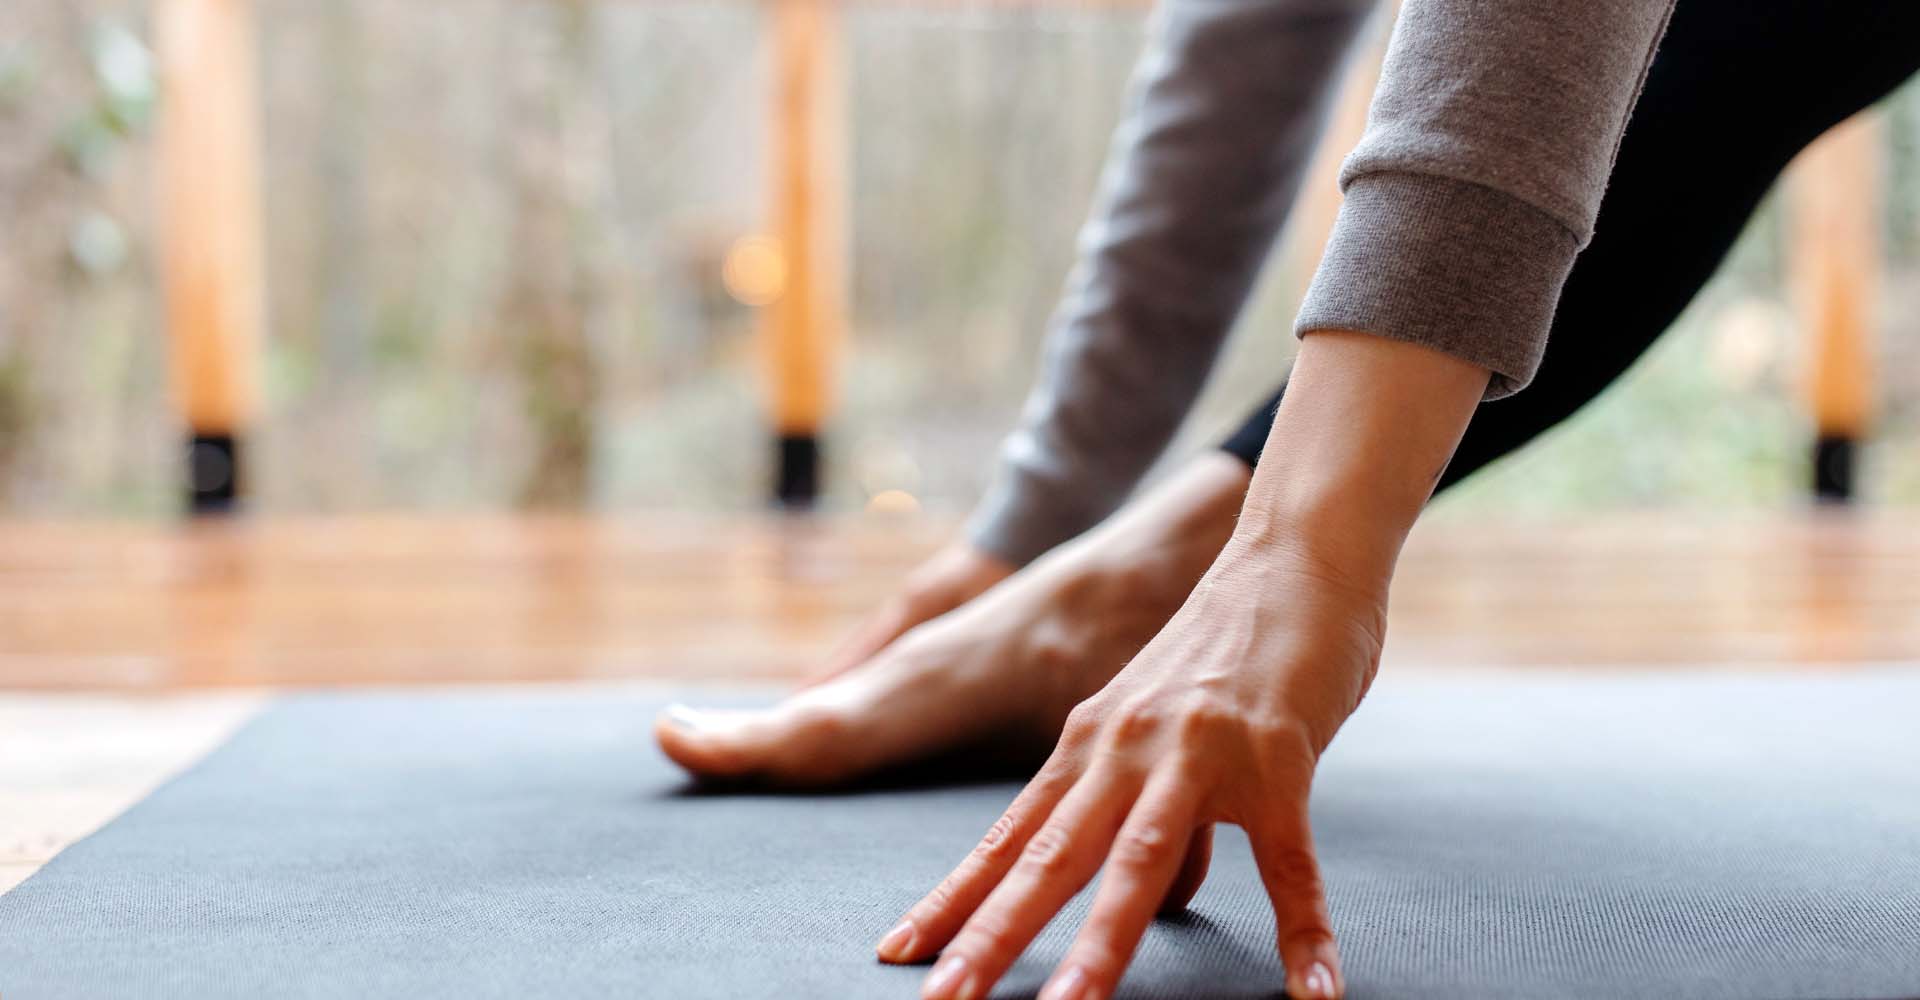 asana - the third limb of yoga